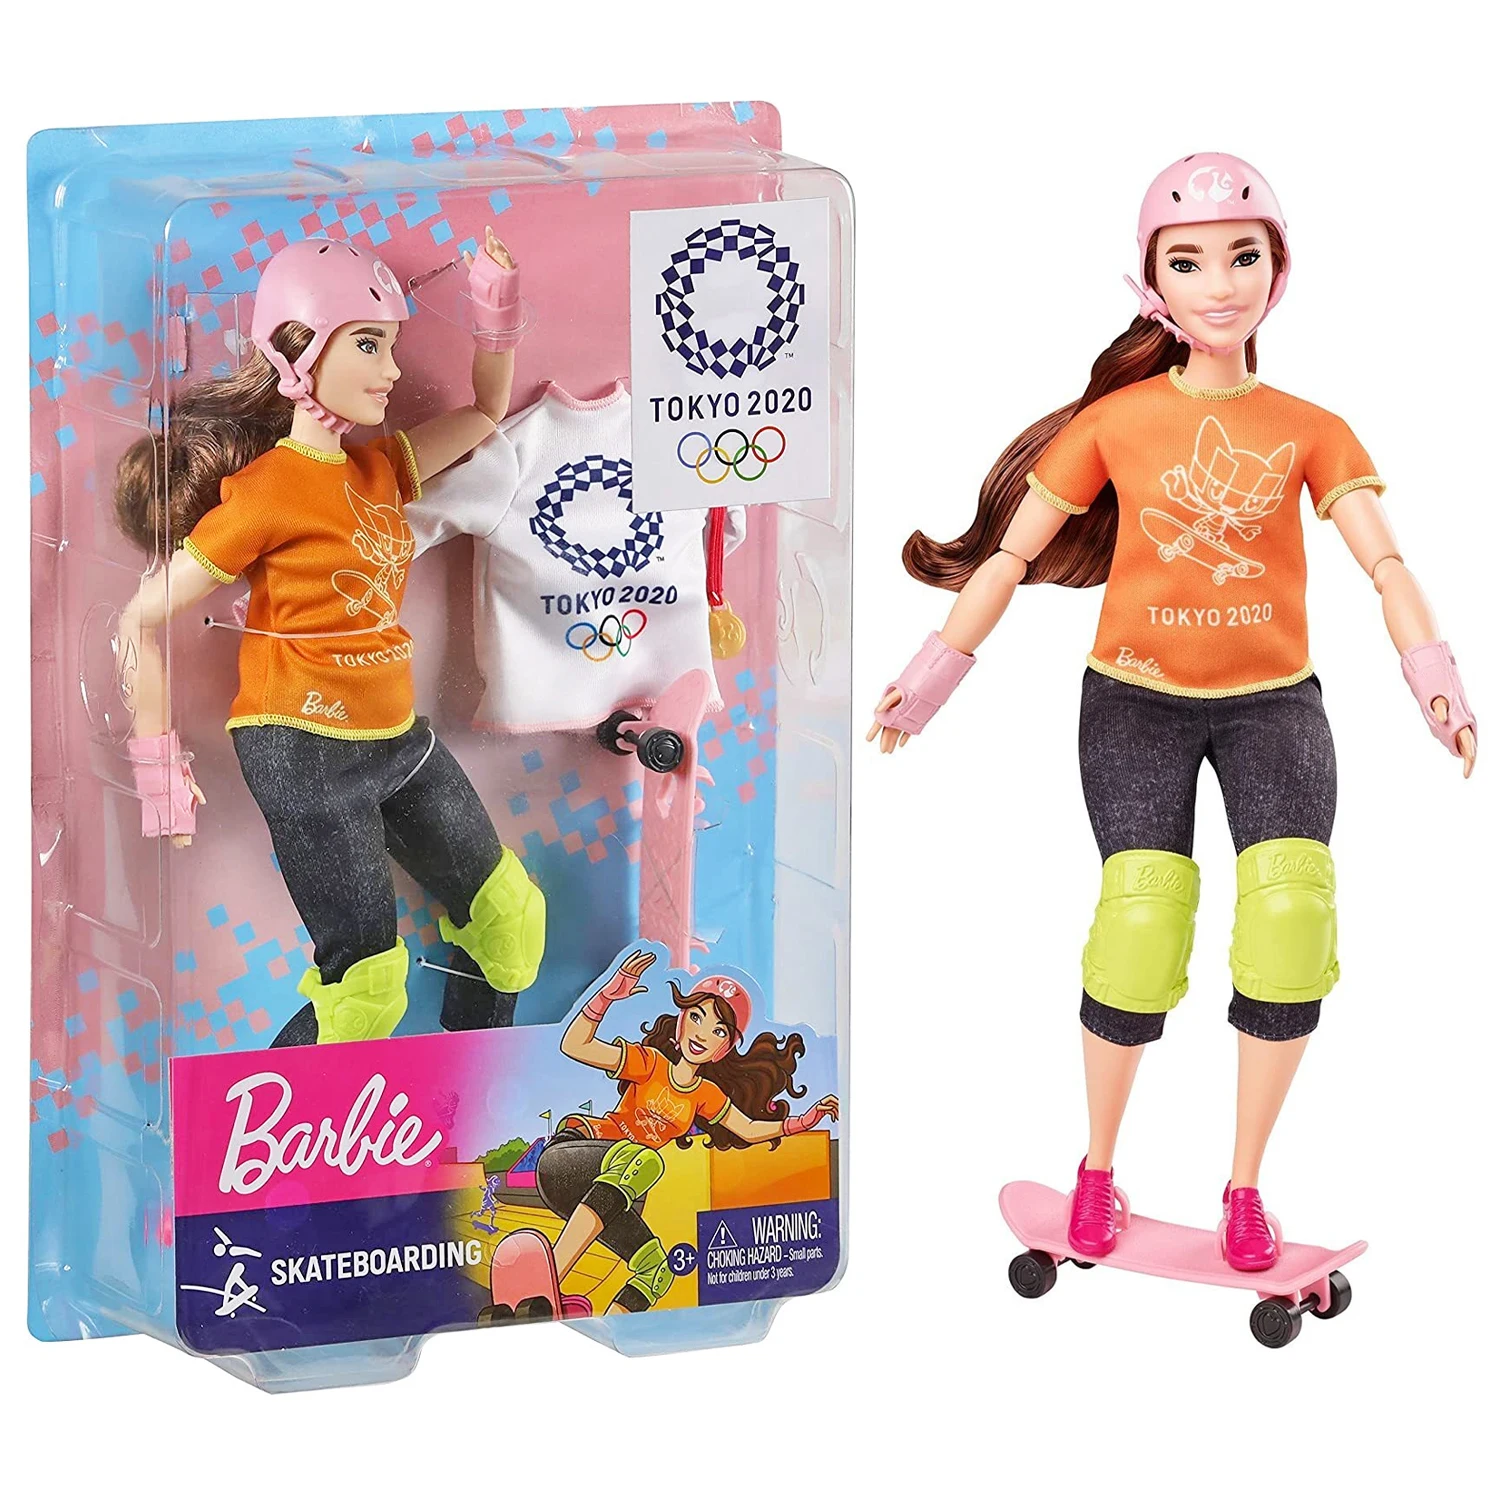 Muñeca Barbie skateboarder Tokyo 2020, Juegos Olímpicos _ - AliExpress  Mobile